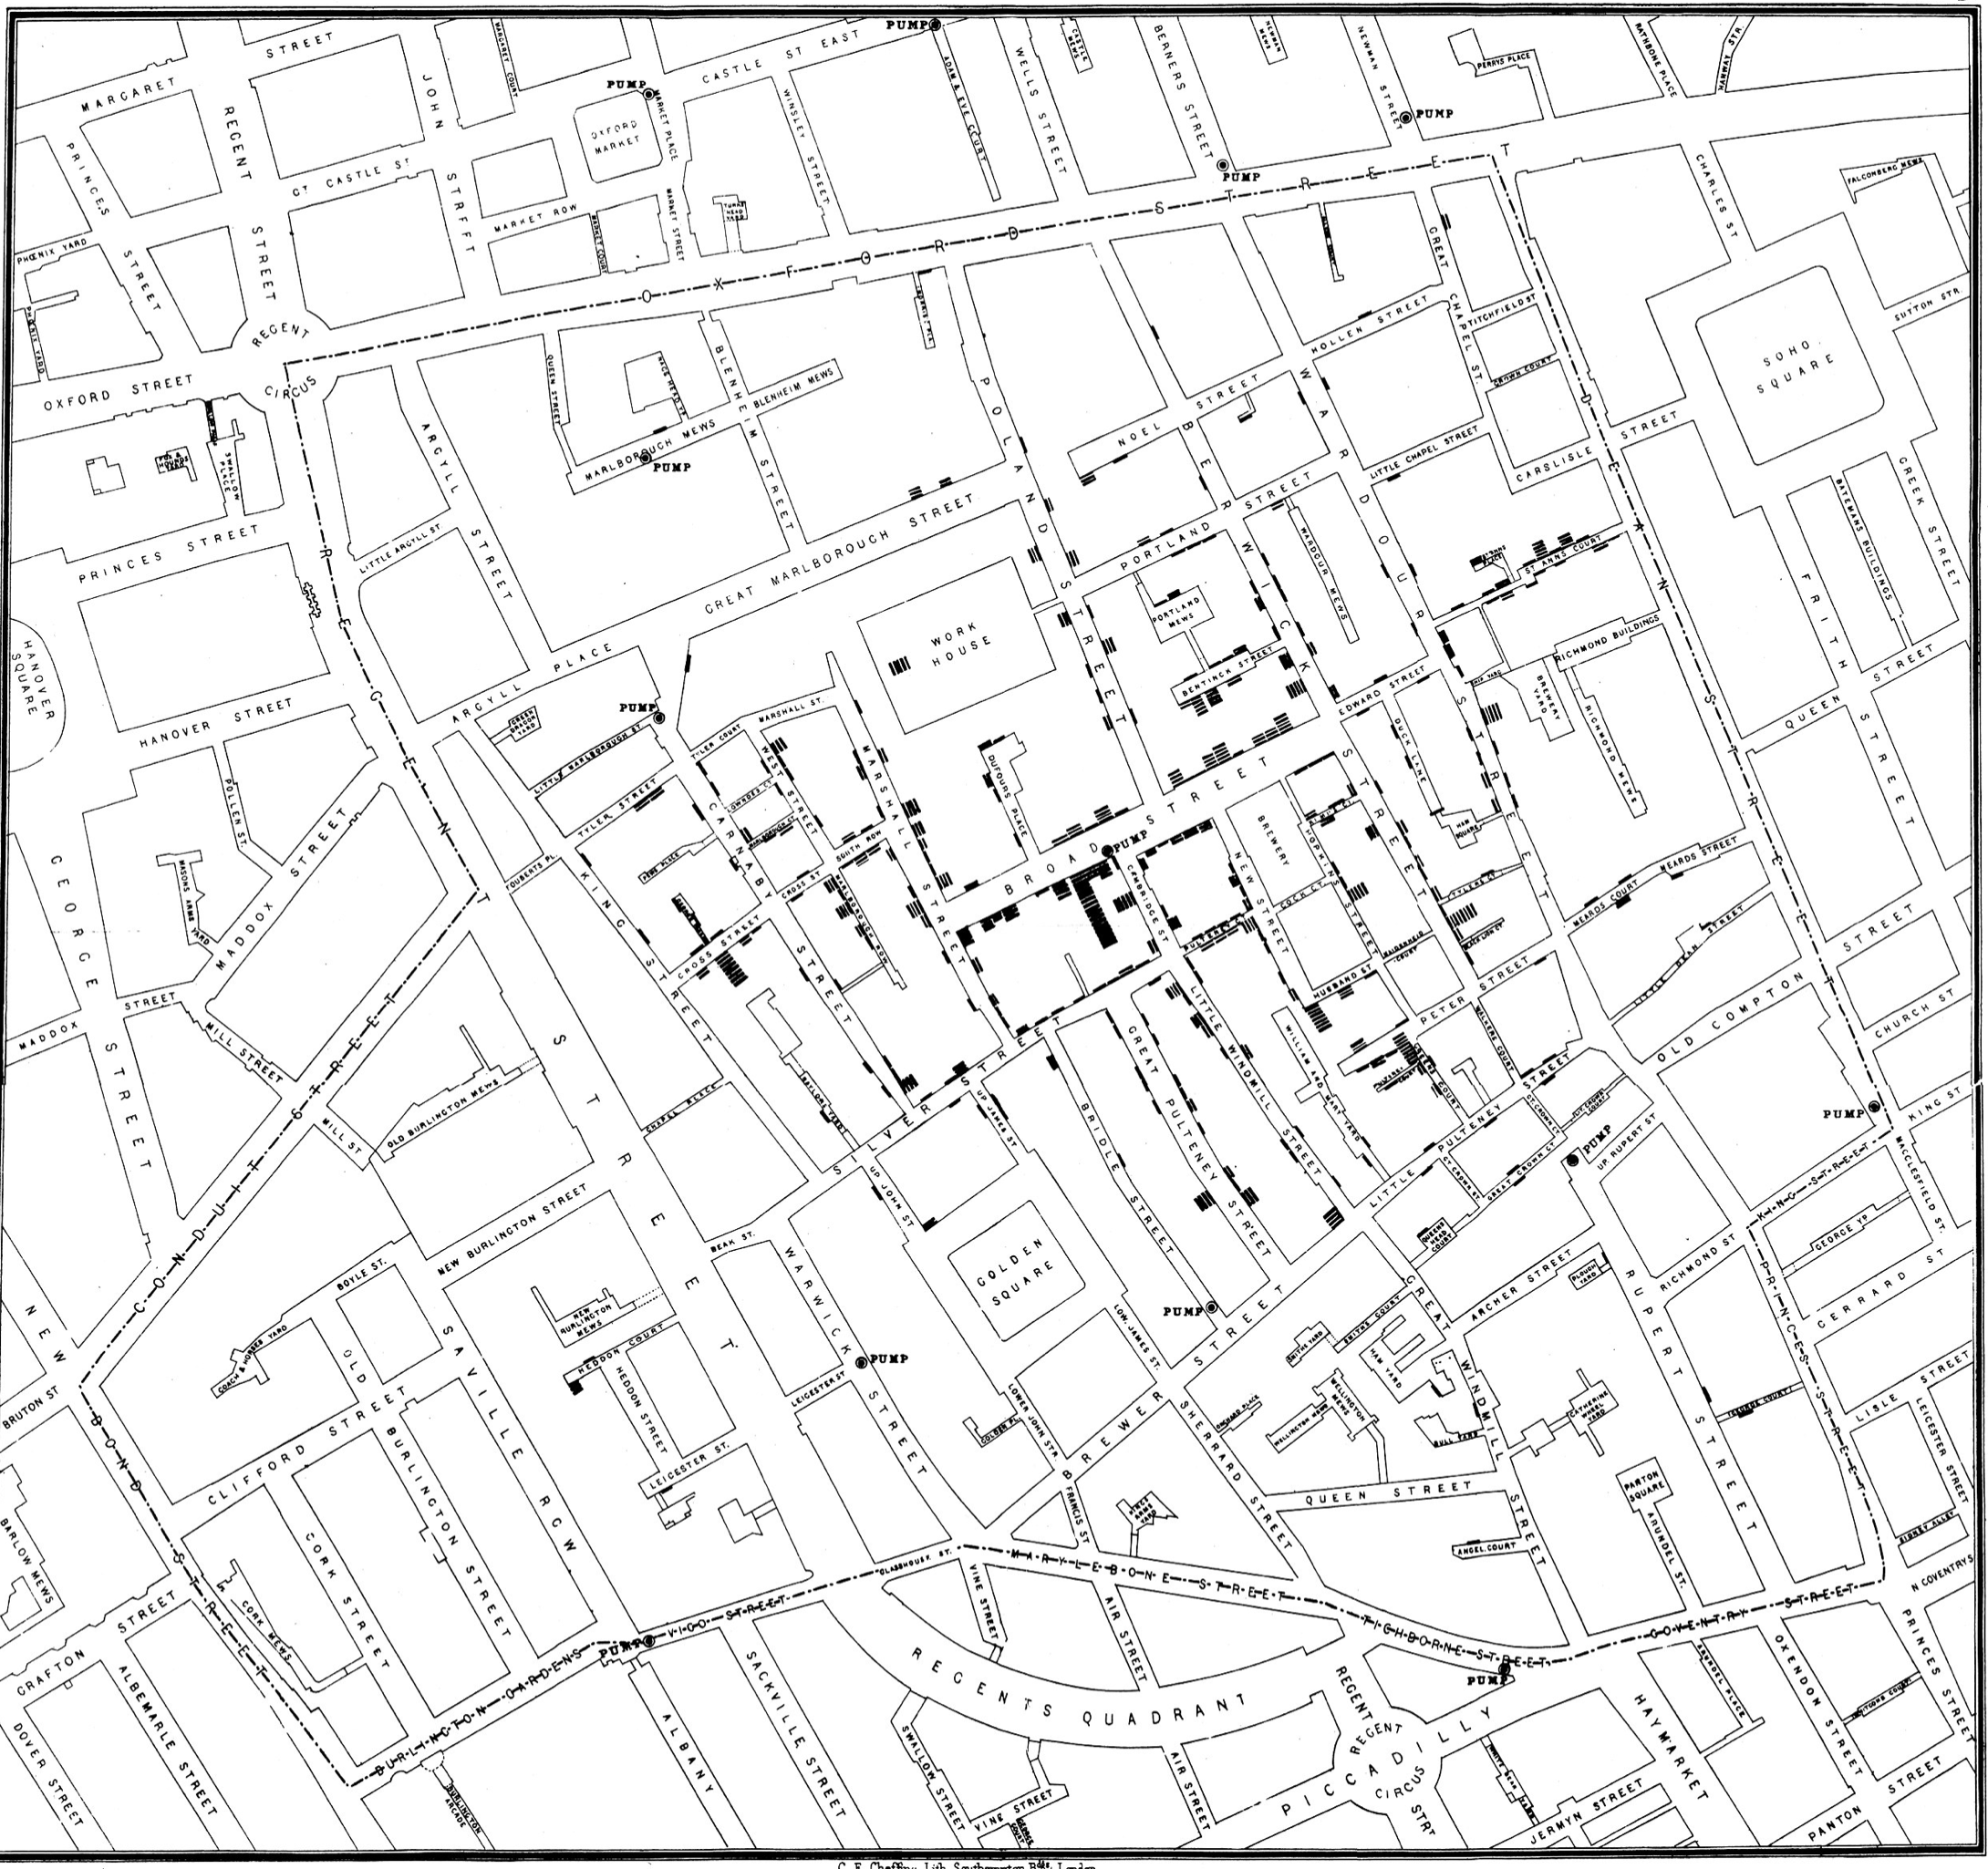 Classic epidemiology visualizations - John Snow's Cholera Broad Street Ghost Map